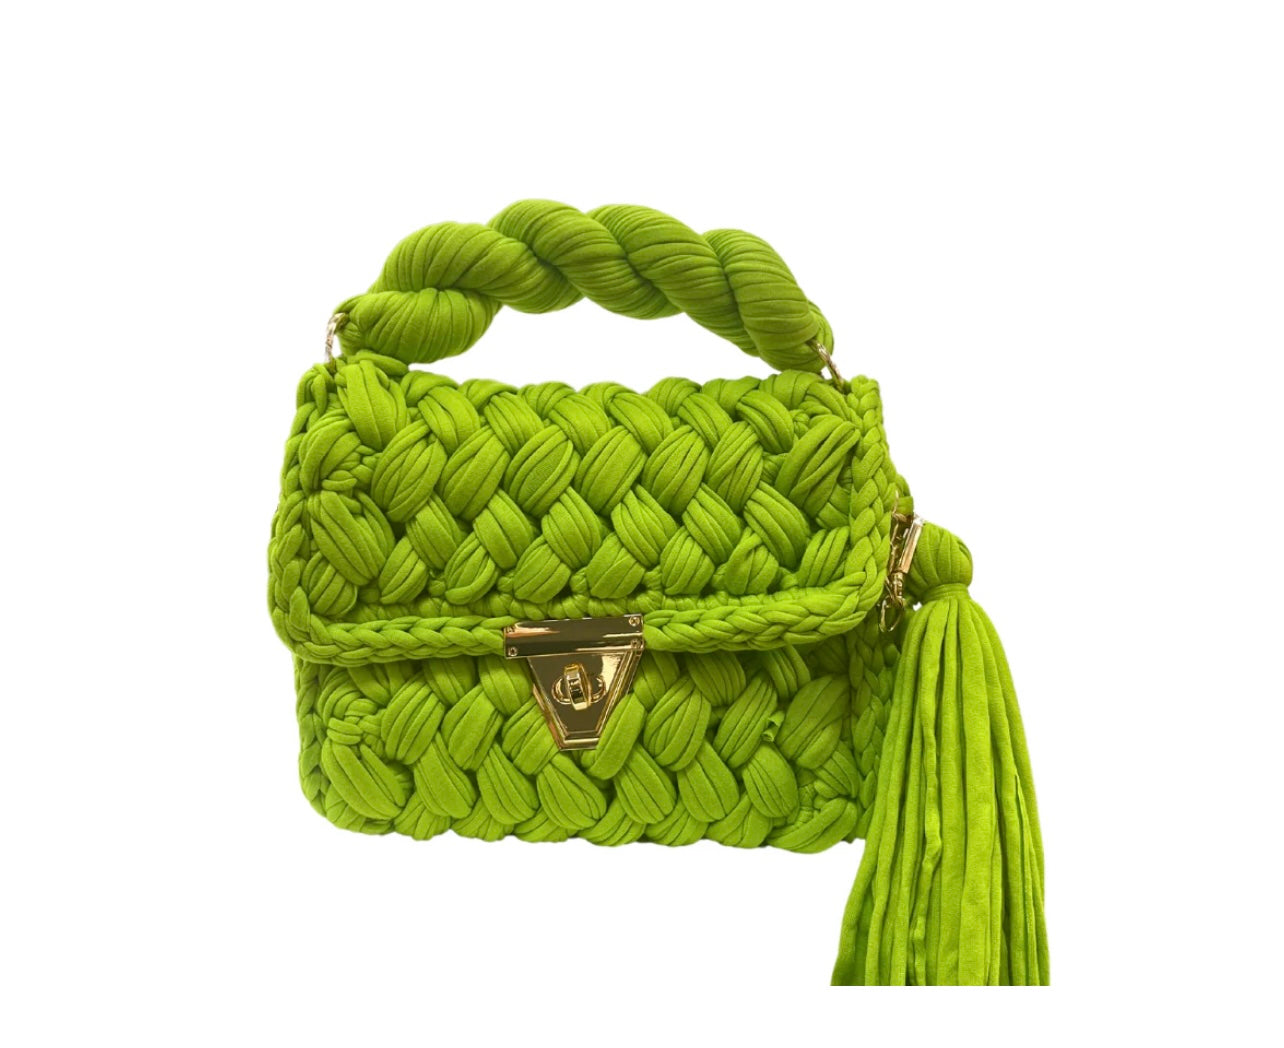 “Brunch Ready” Chartreuse Woven Crocheted Handbag